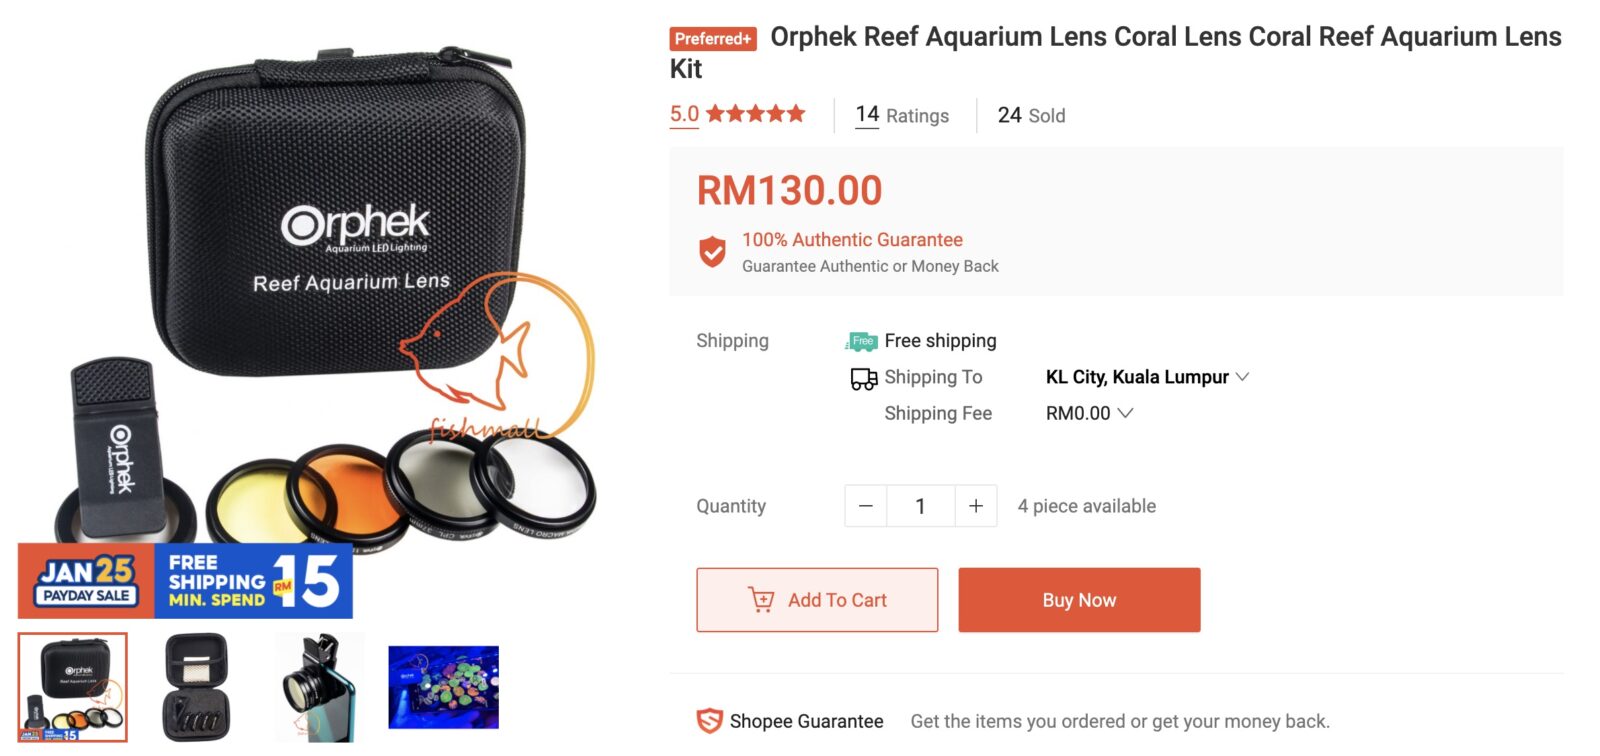 Buy orphek coral lens on shopee